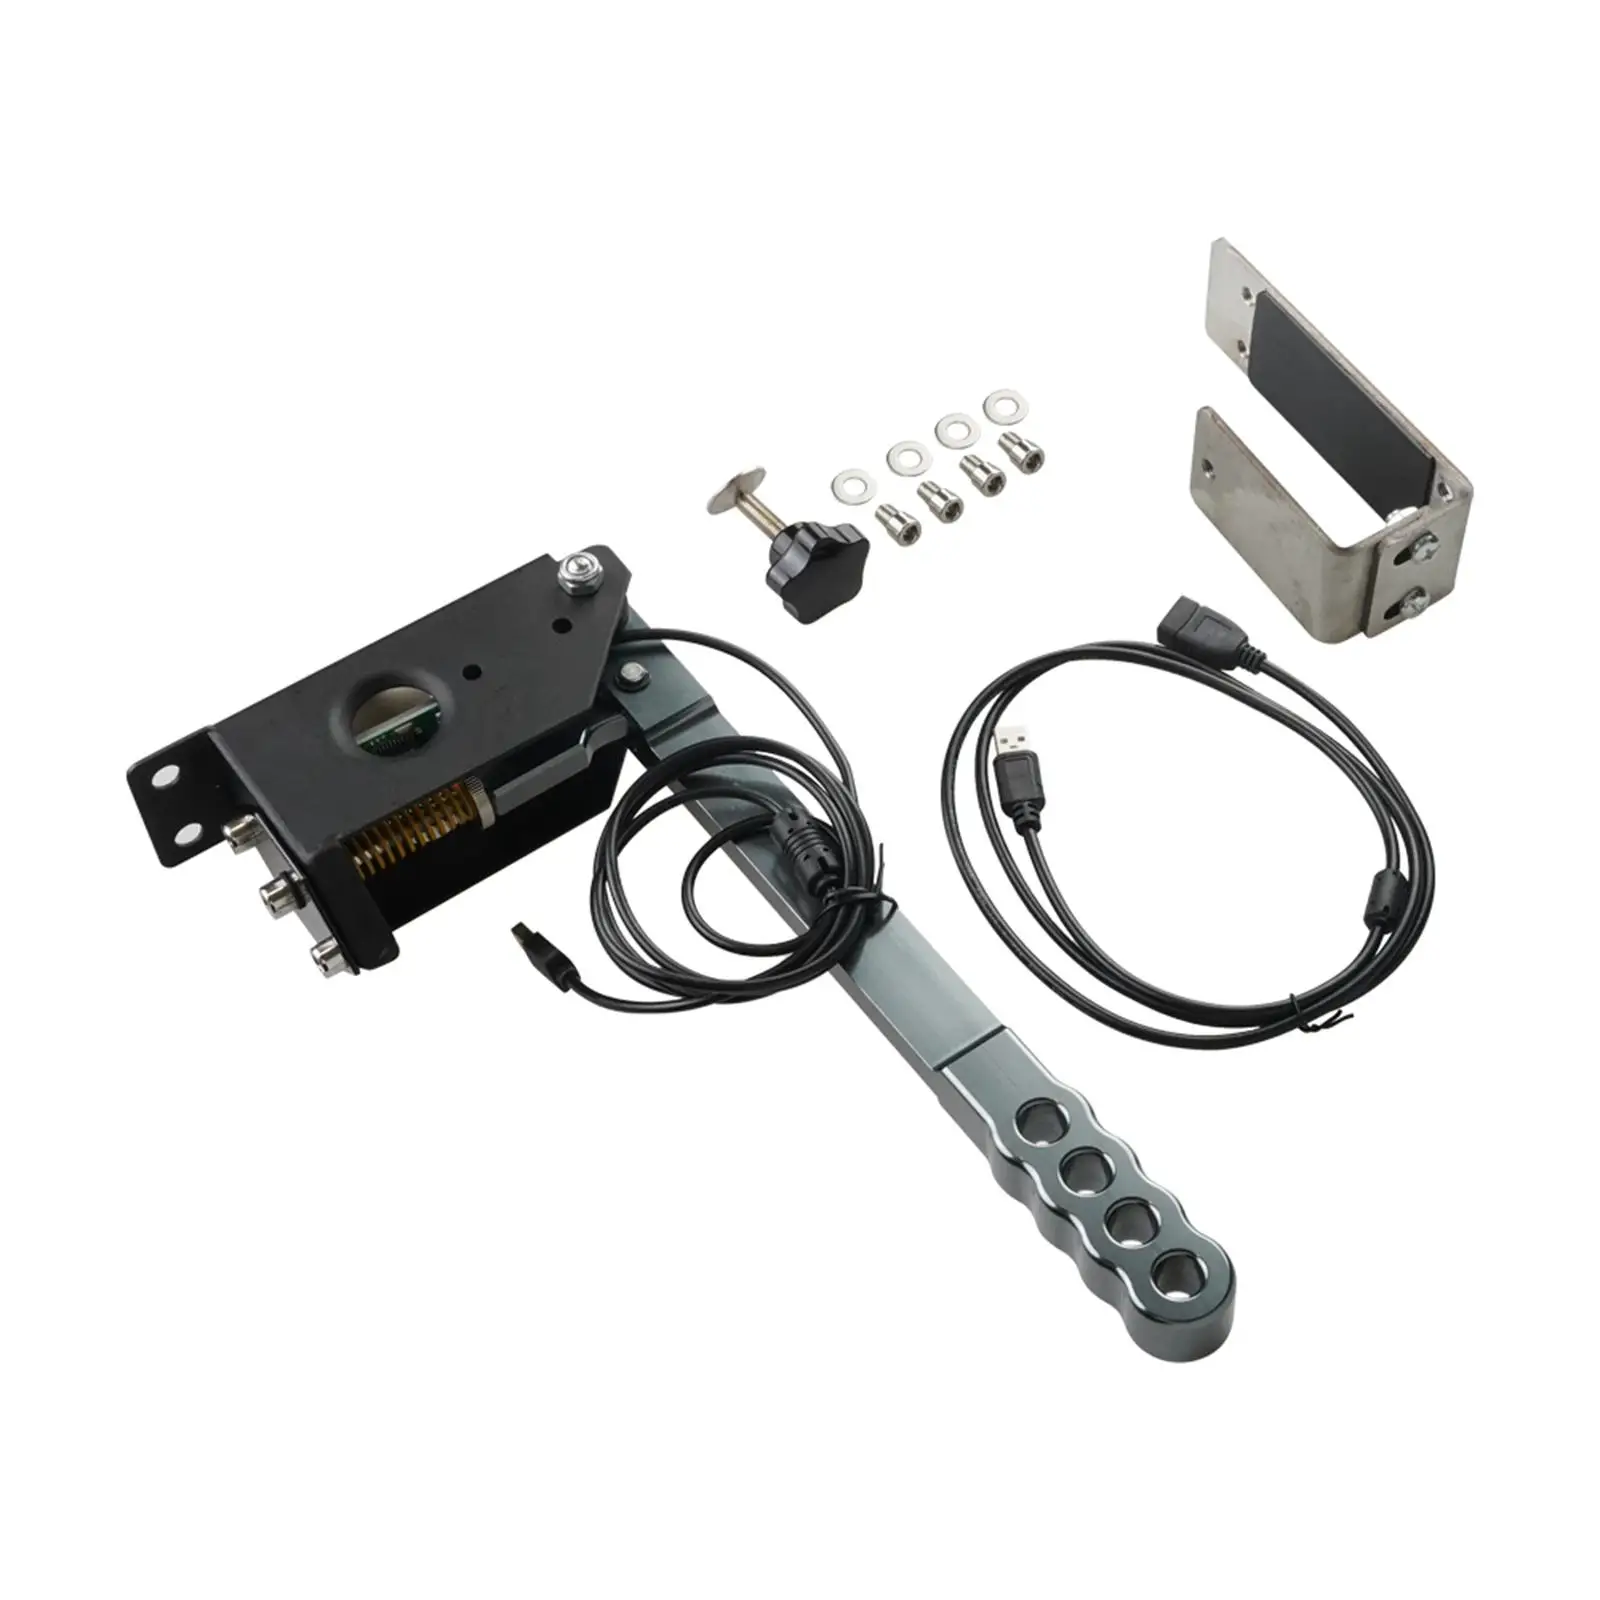 Handbrake 14 Bit Easy to Install with Fixing Clip USB Game Peripherals Handbrake for Logitech G29 Racing Games G27 G25 PC